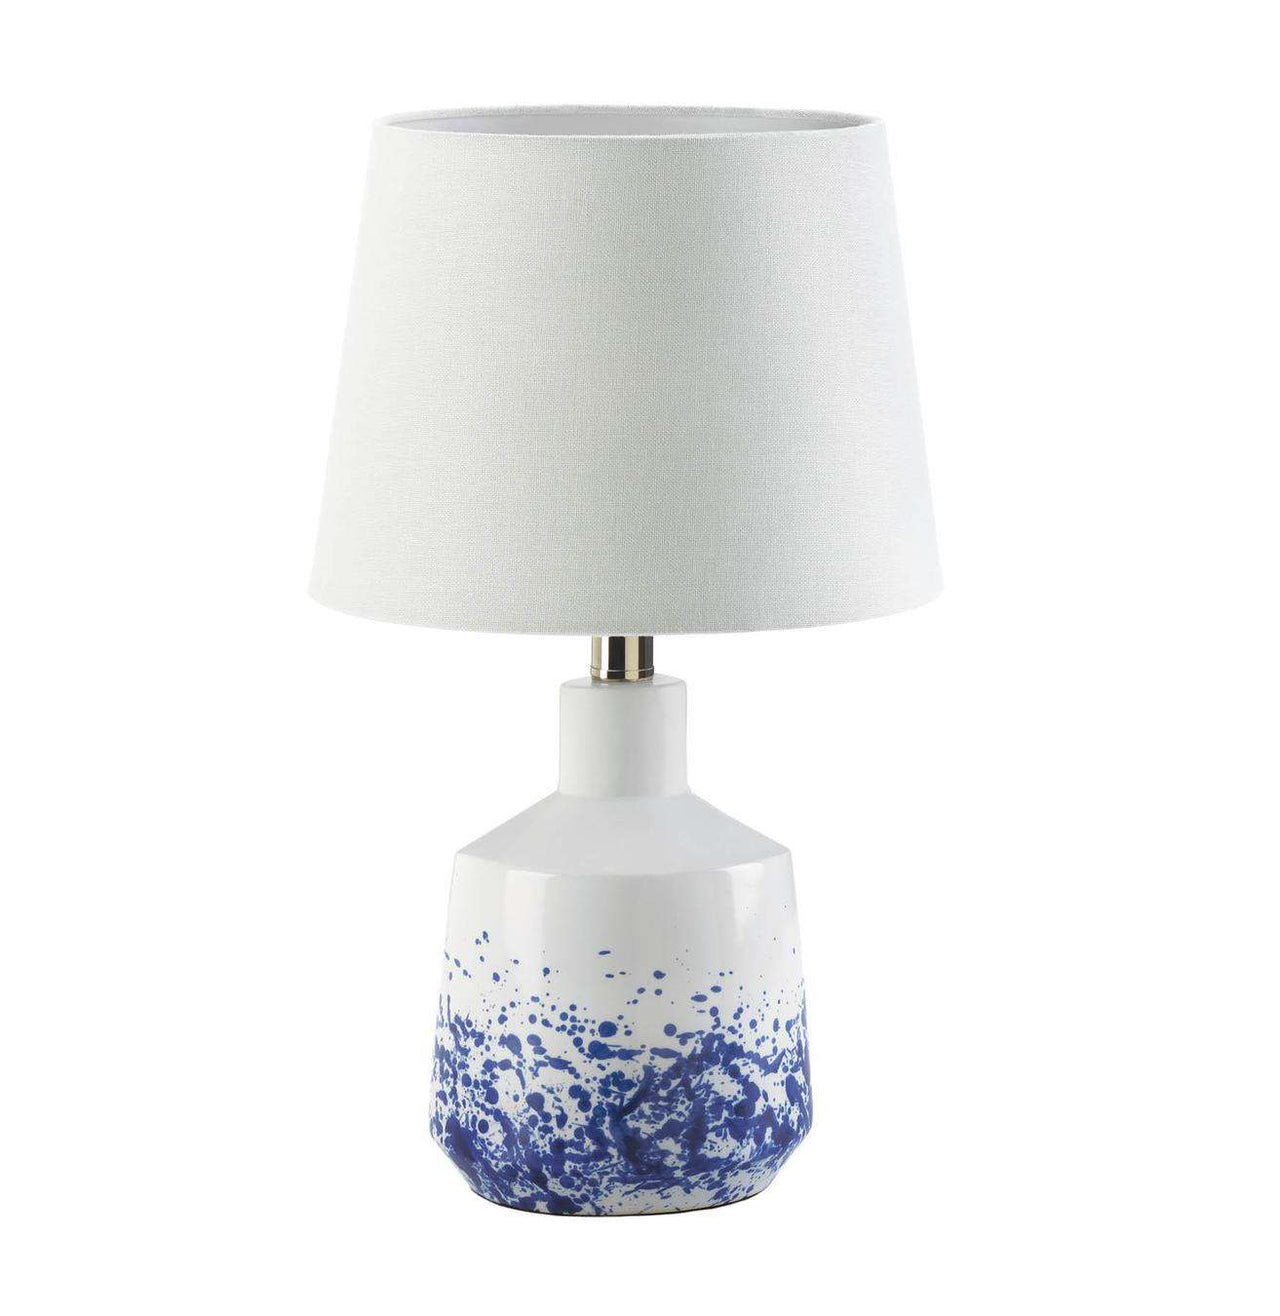 White & Blue Splash Table Lamp Accent Plus 